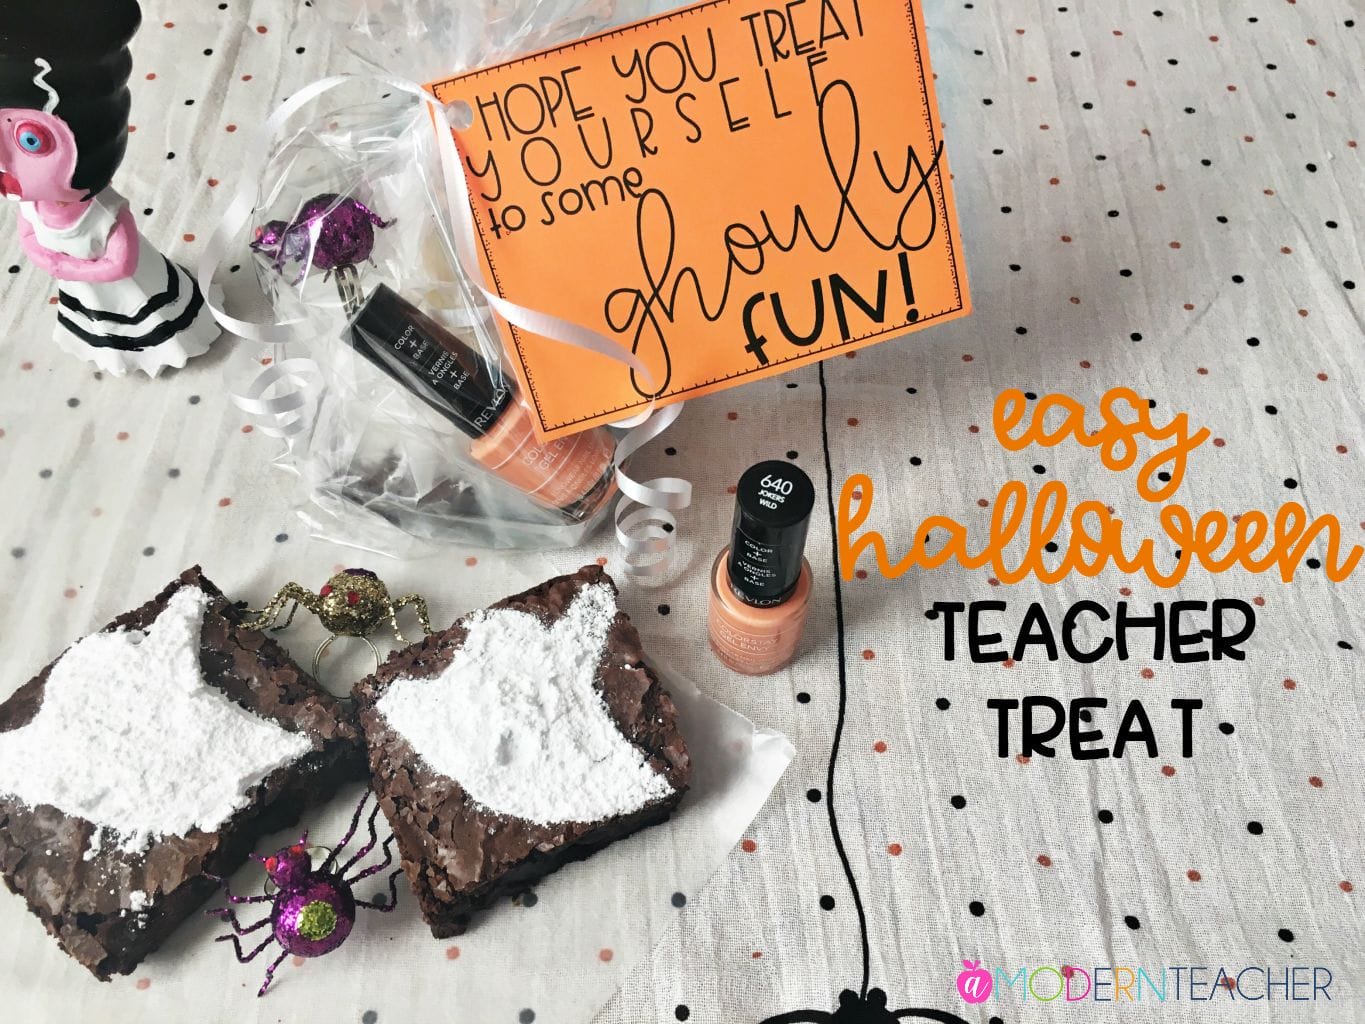 Halloween Treat for Teachers